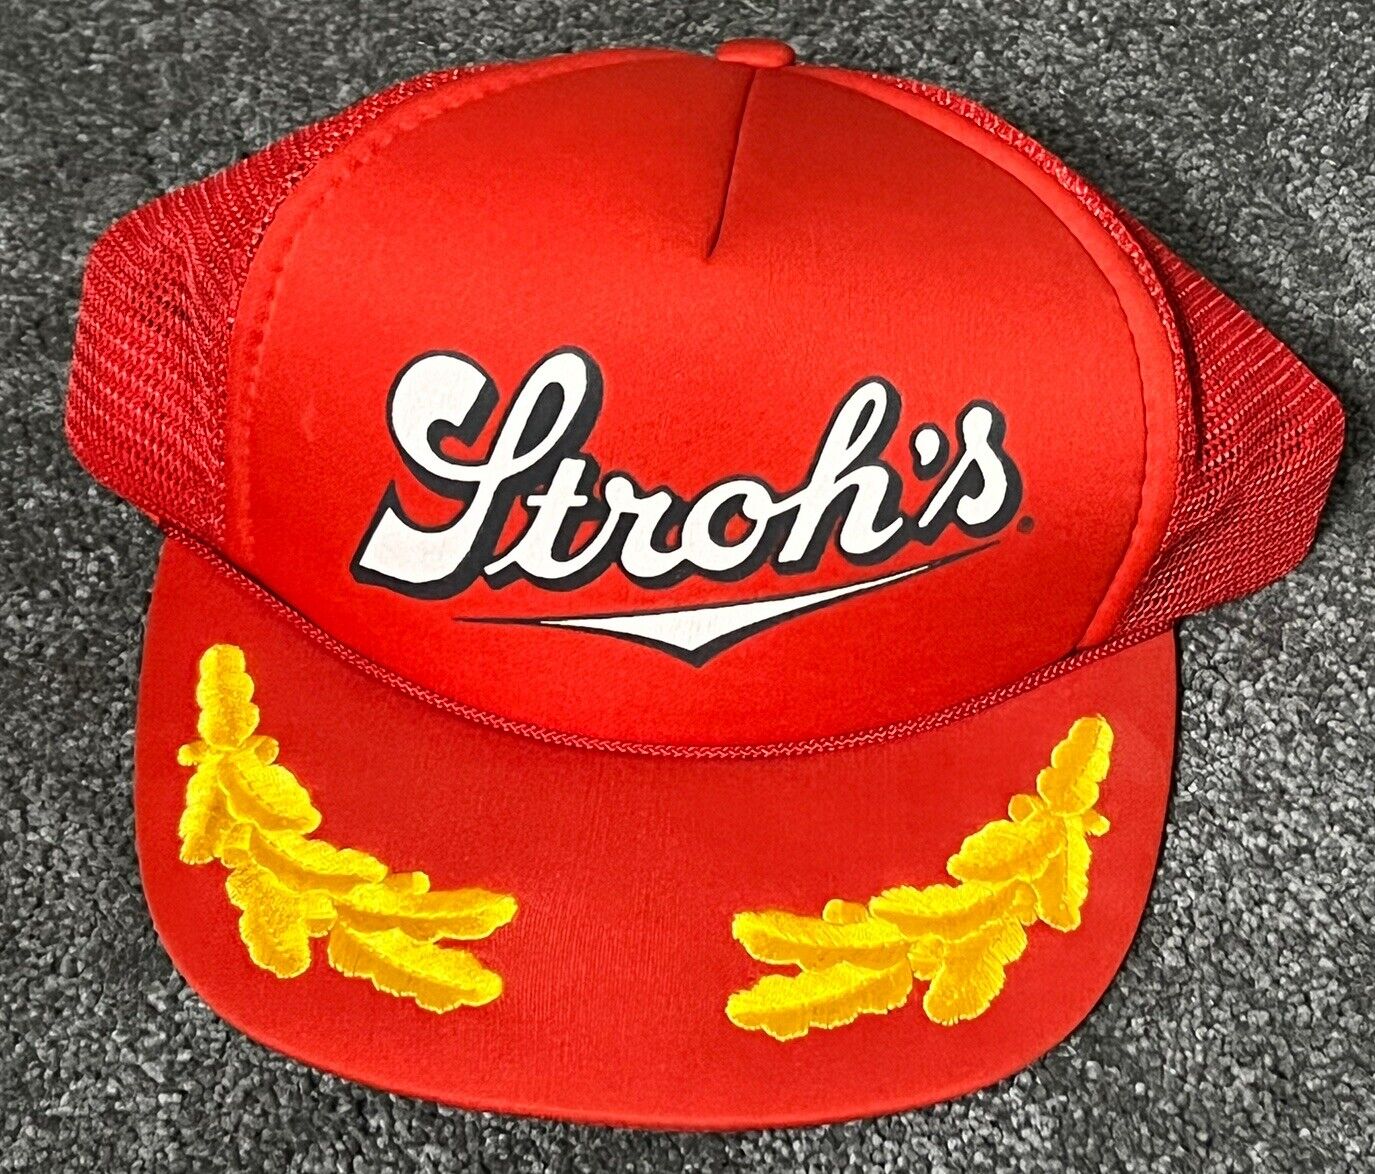 Stroh’s Beer Vintage White Red Mesh Trucker Foam Hat Cap Snapback Adjustable NOS